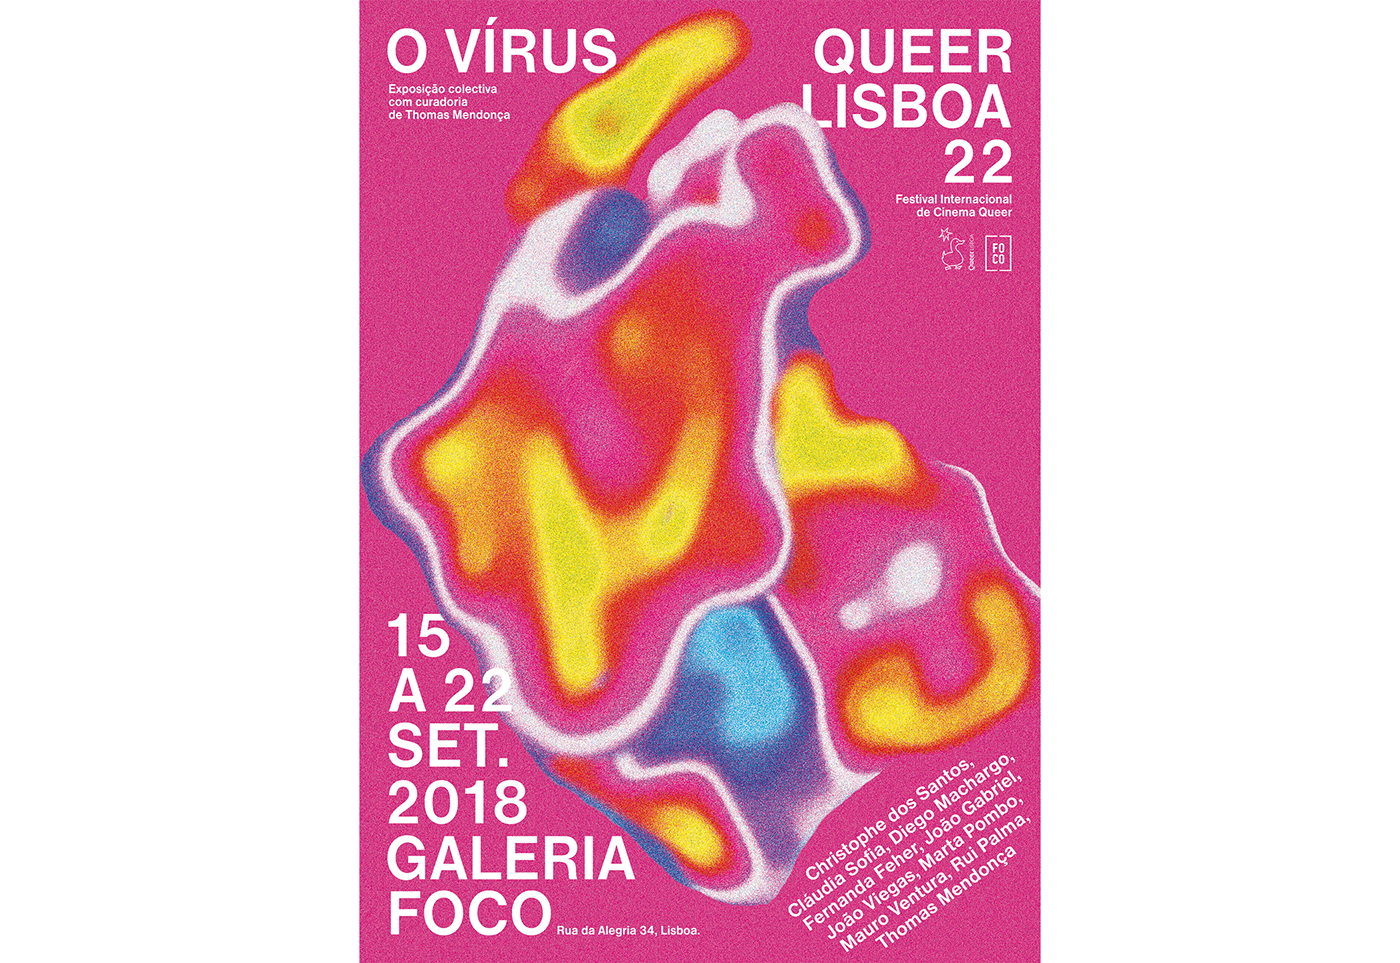 queer lisboa Cinema festival Exhibition  animation  gif virus poster graphic